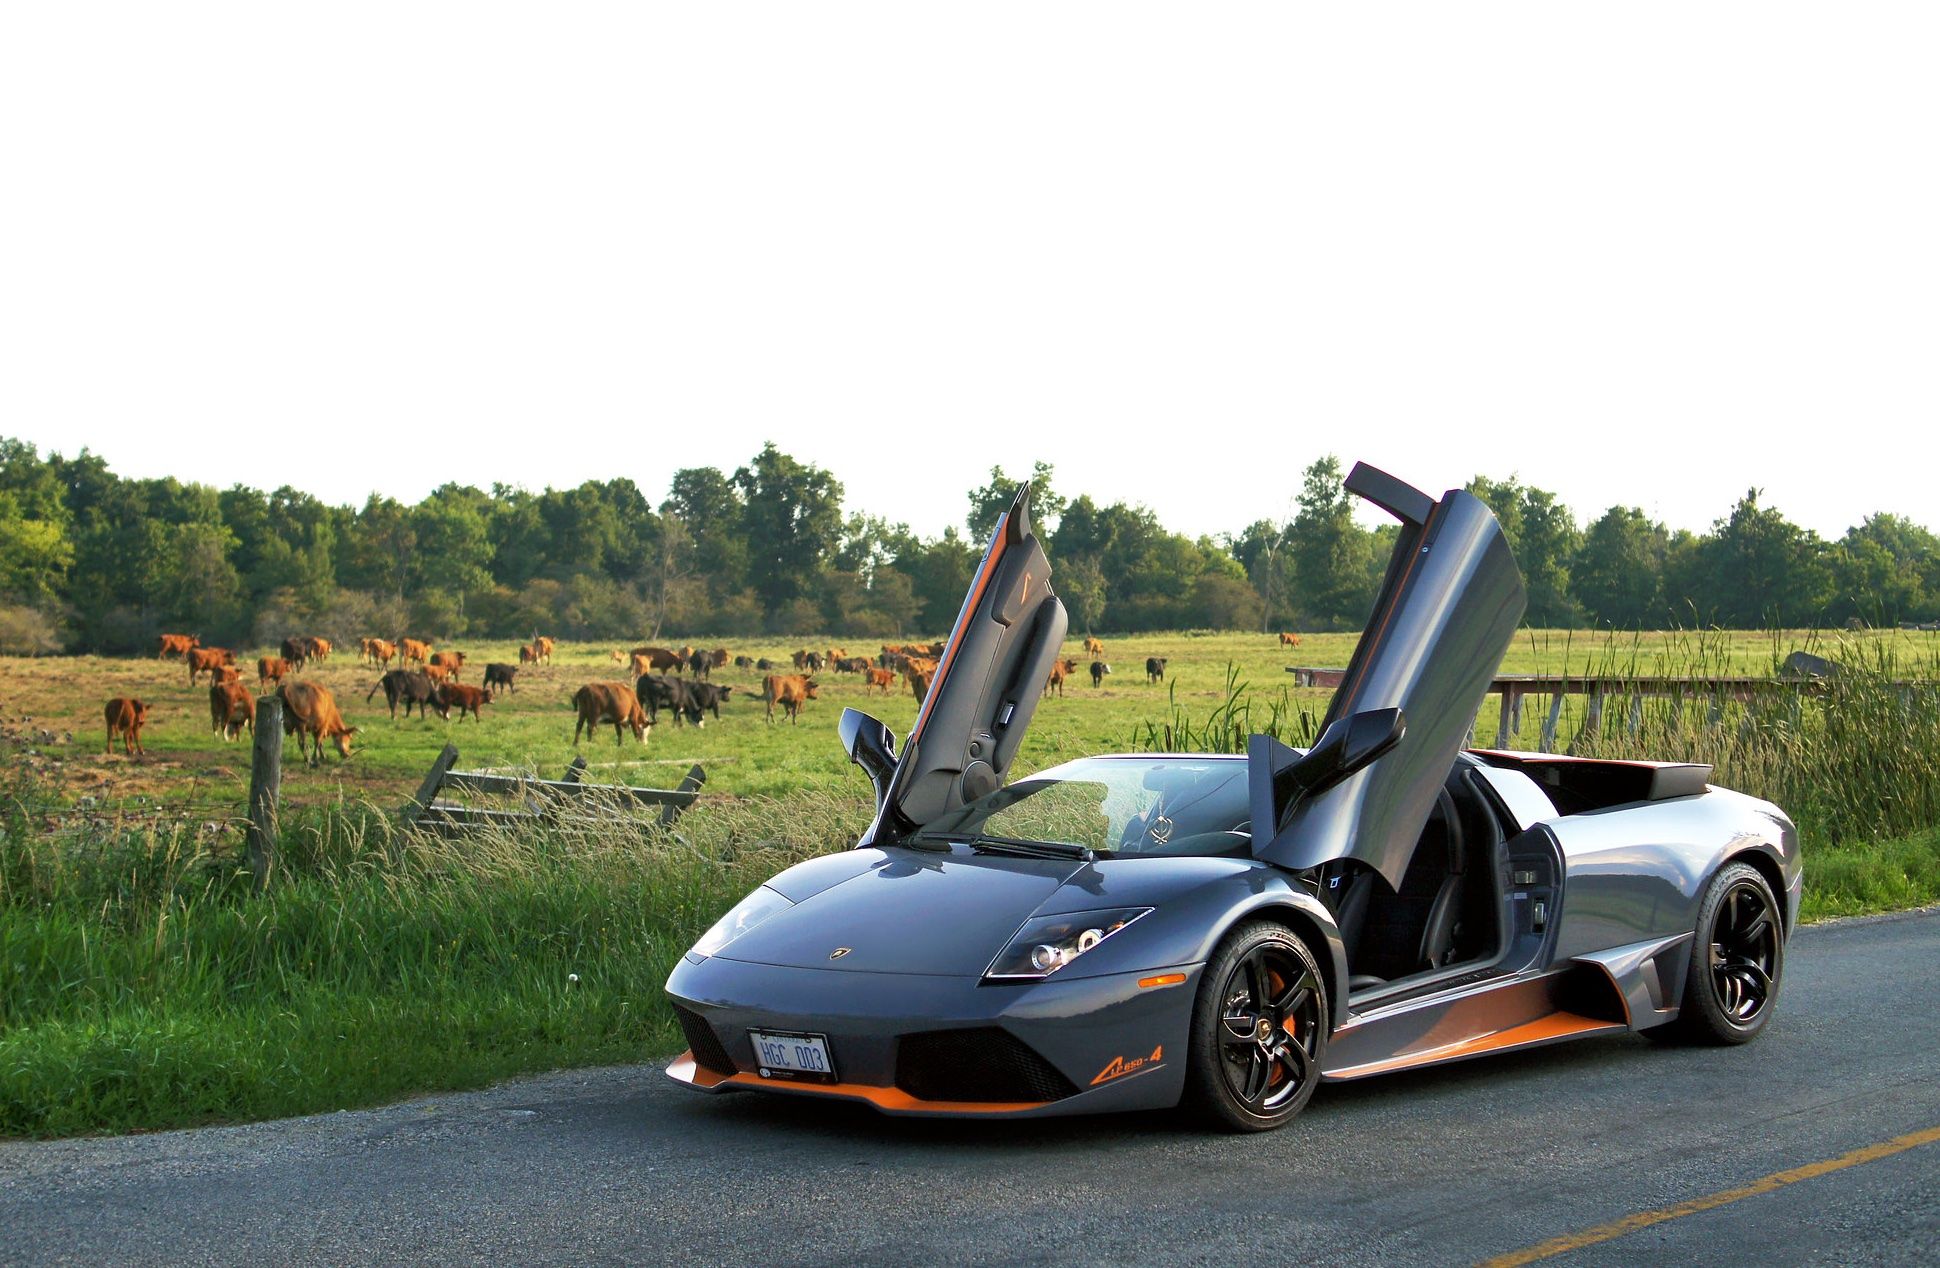 Lamborghini in front of with bull pasture